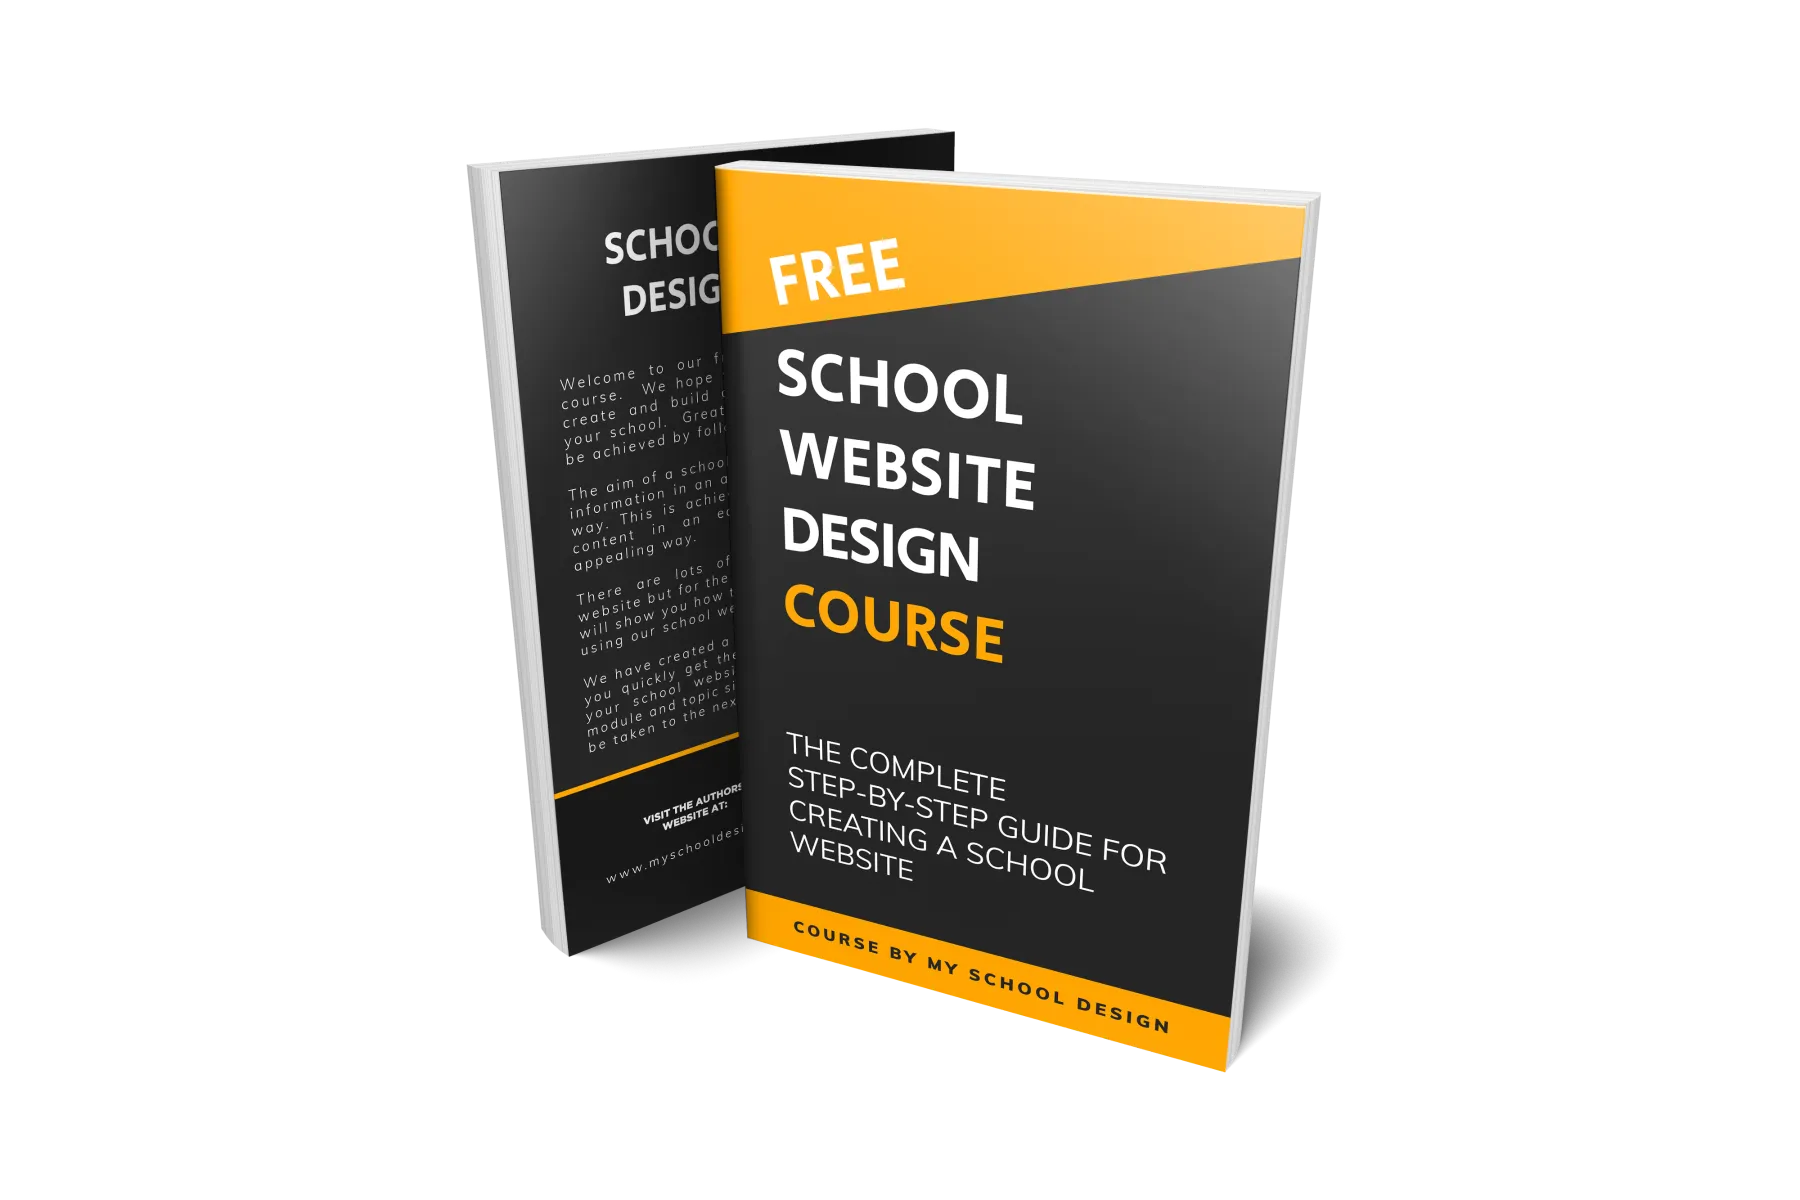 Free School Website Design Course